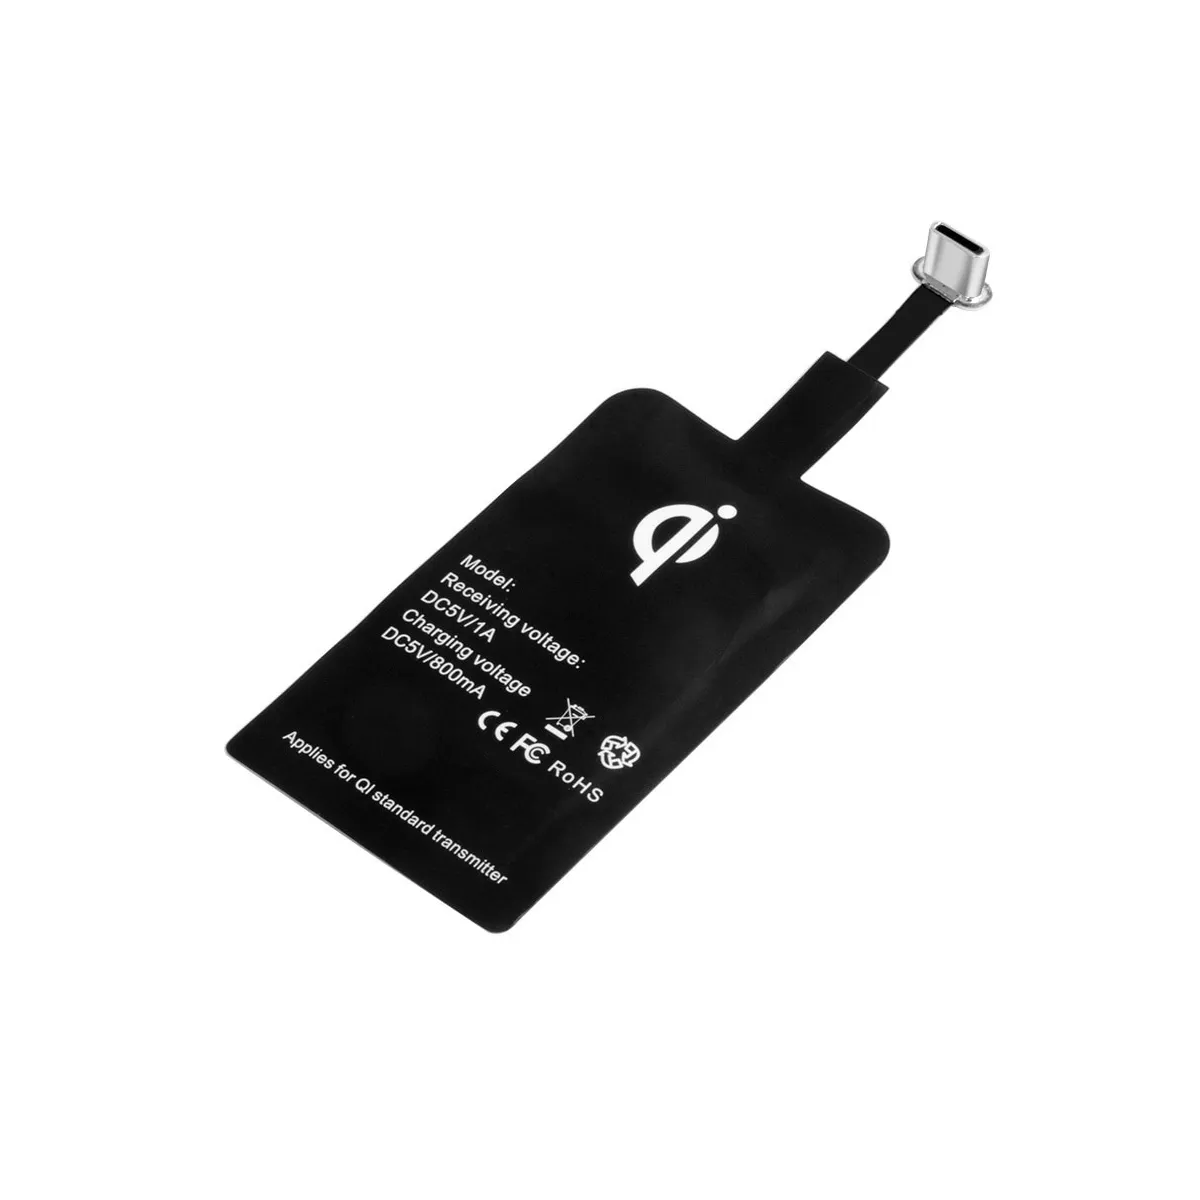 Incarcator Wireless Qi Type-C Emeszon, Receiver Wireless 5V / 1A model QI1A, compatibil cu telefone USB Type - C, negru